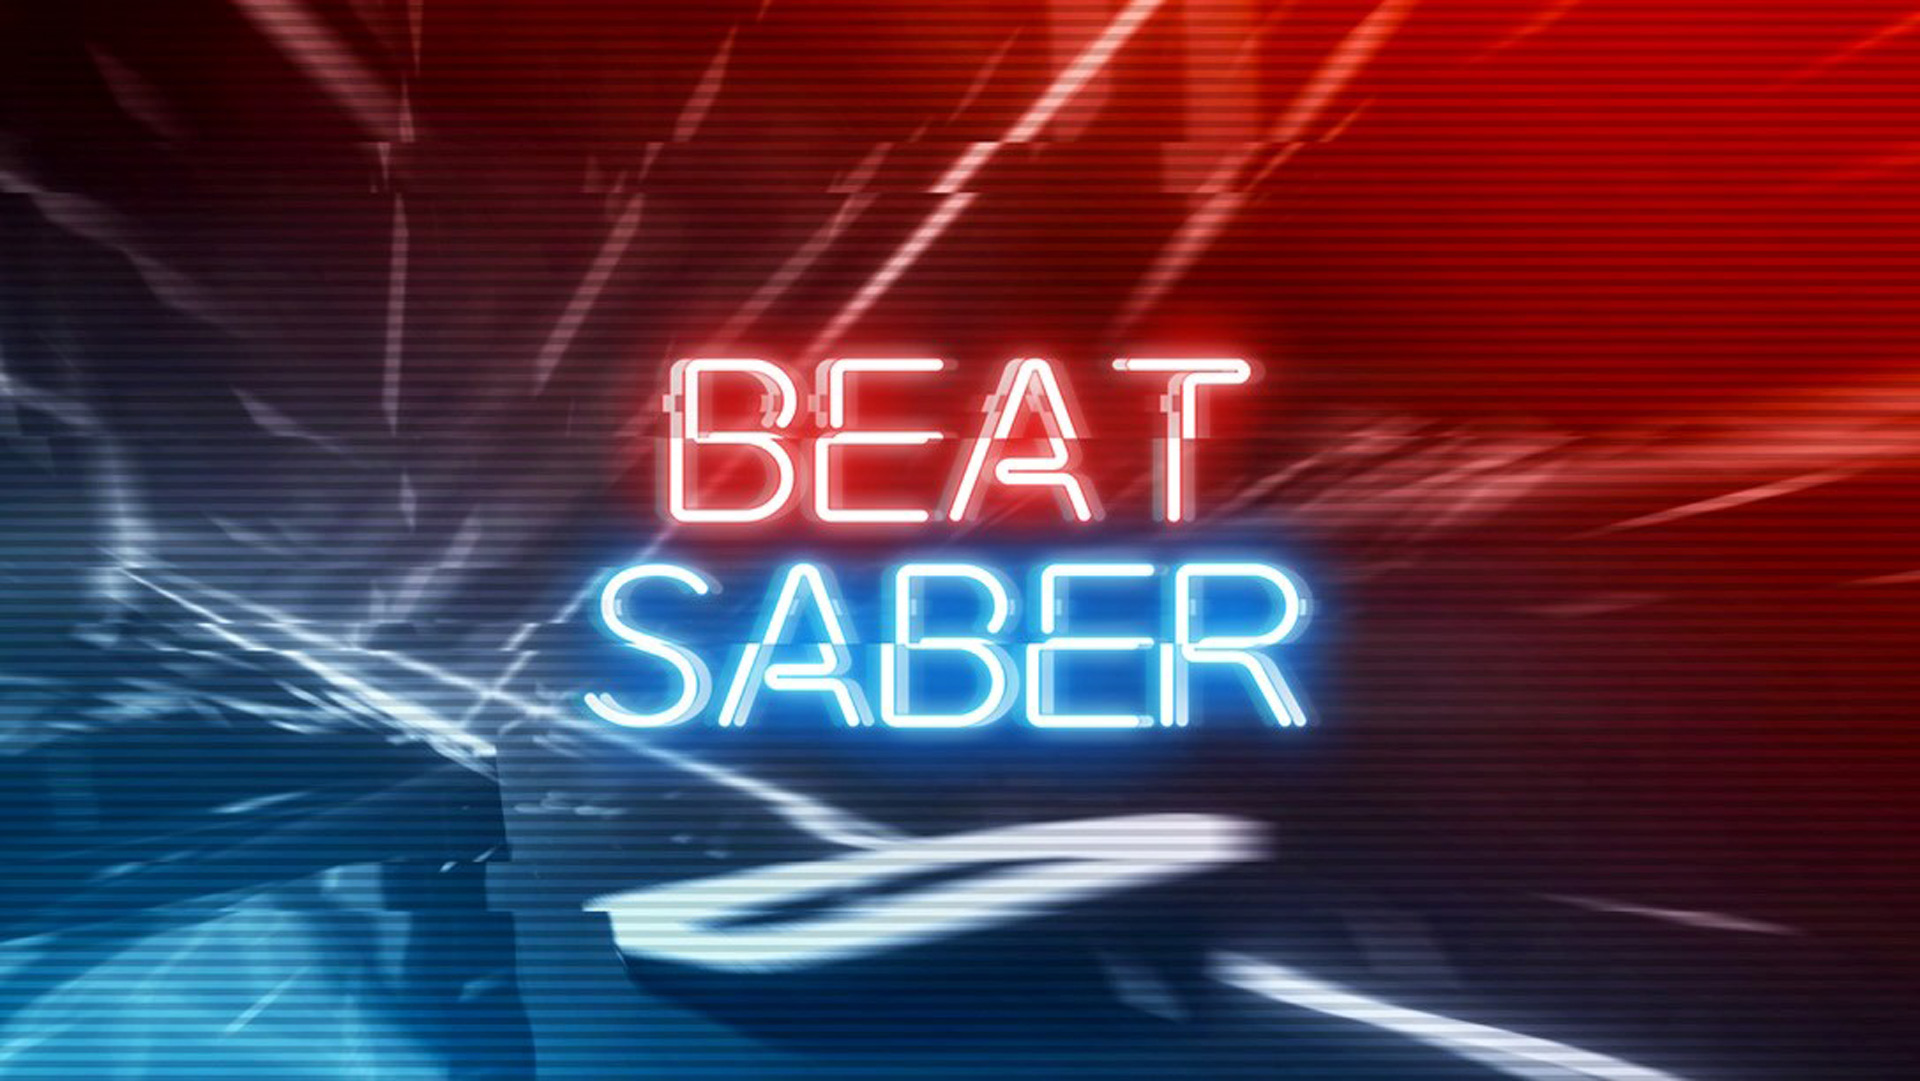 beat saber vr - Beat Saber VR Has Got New 360 Degree Mode - Watch Video